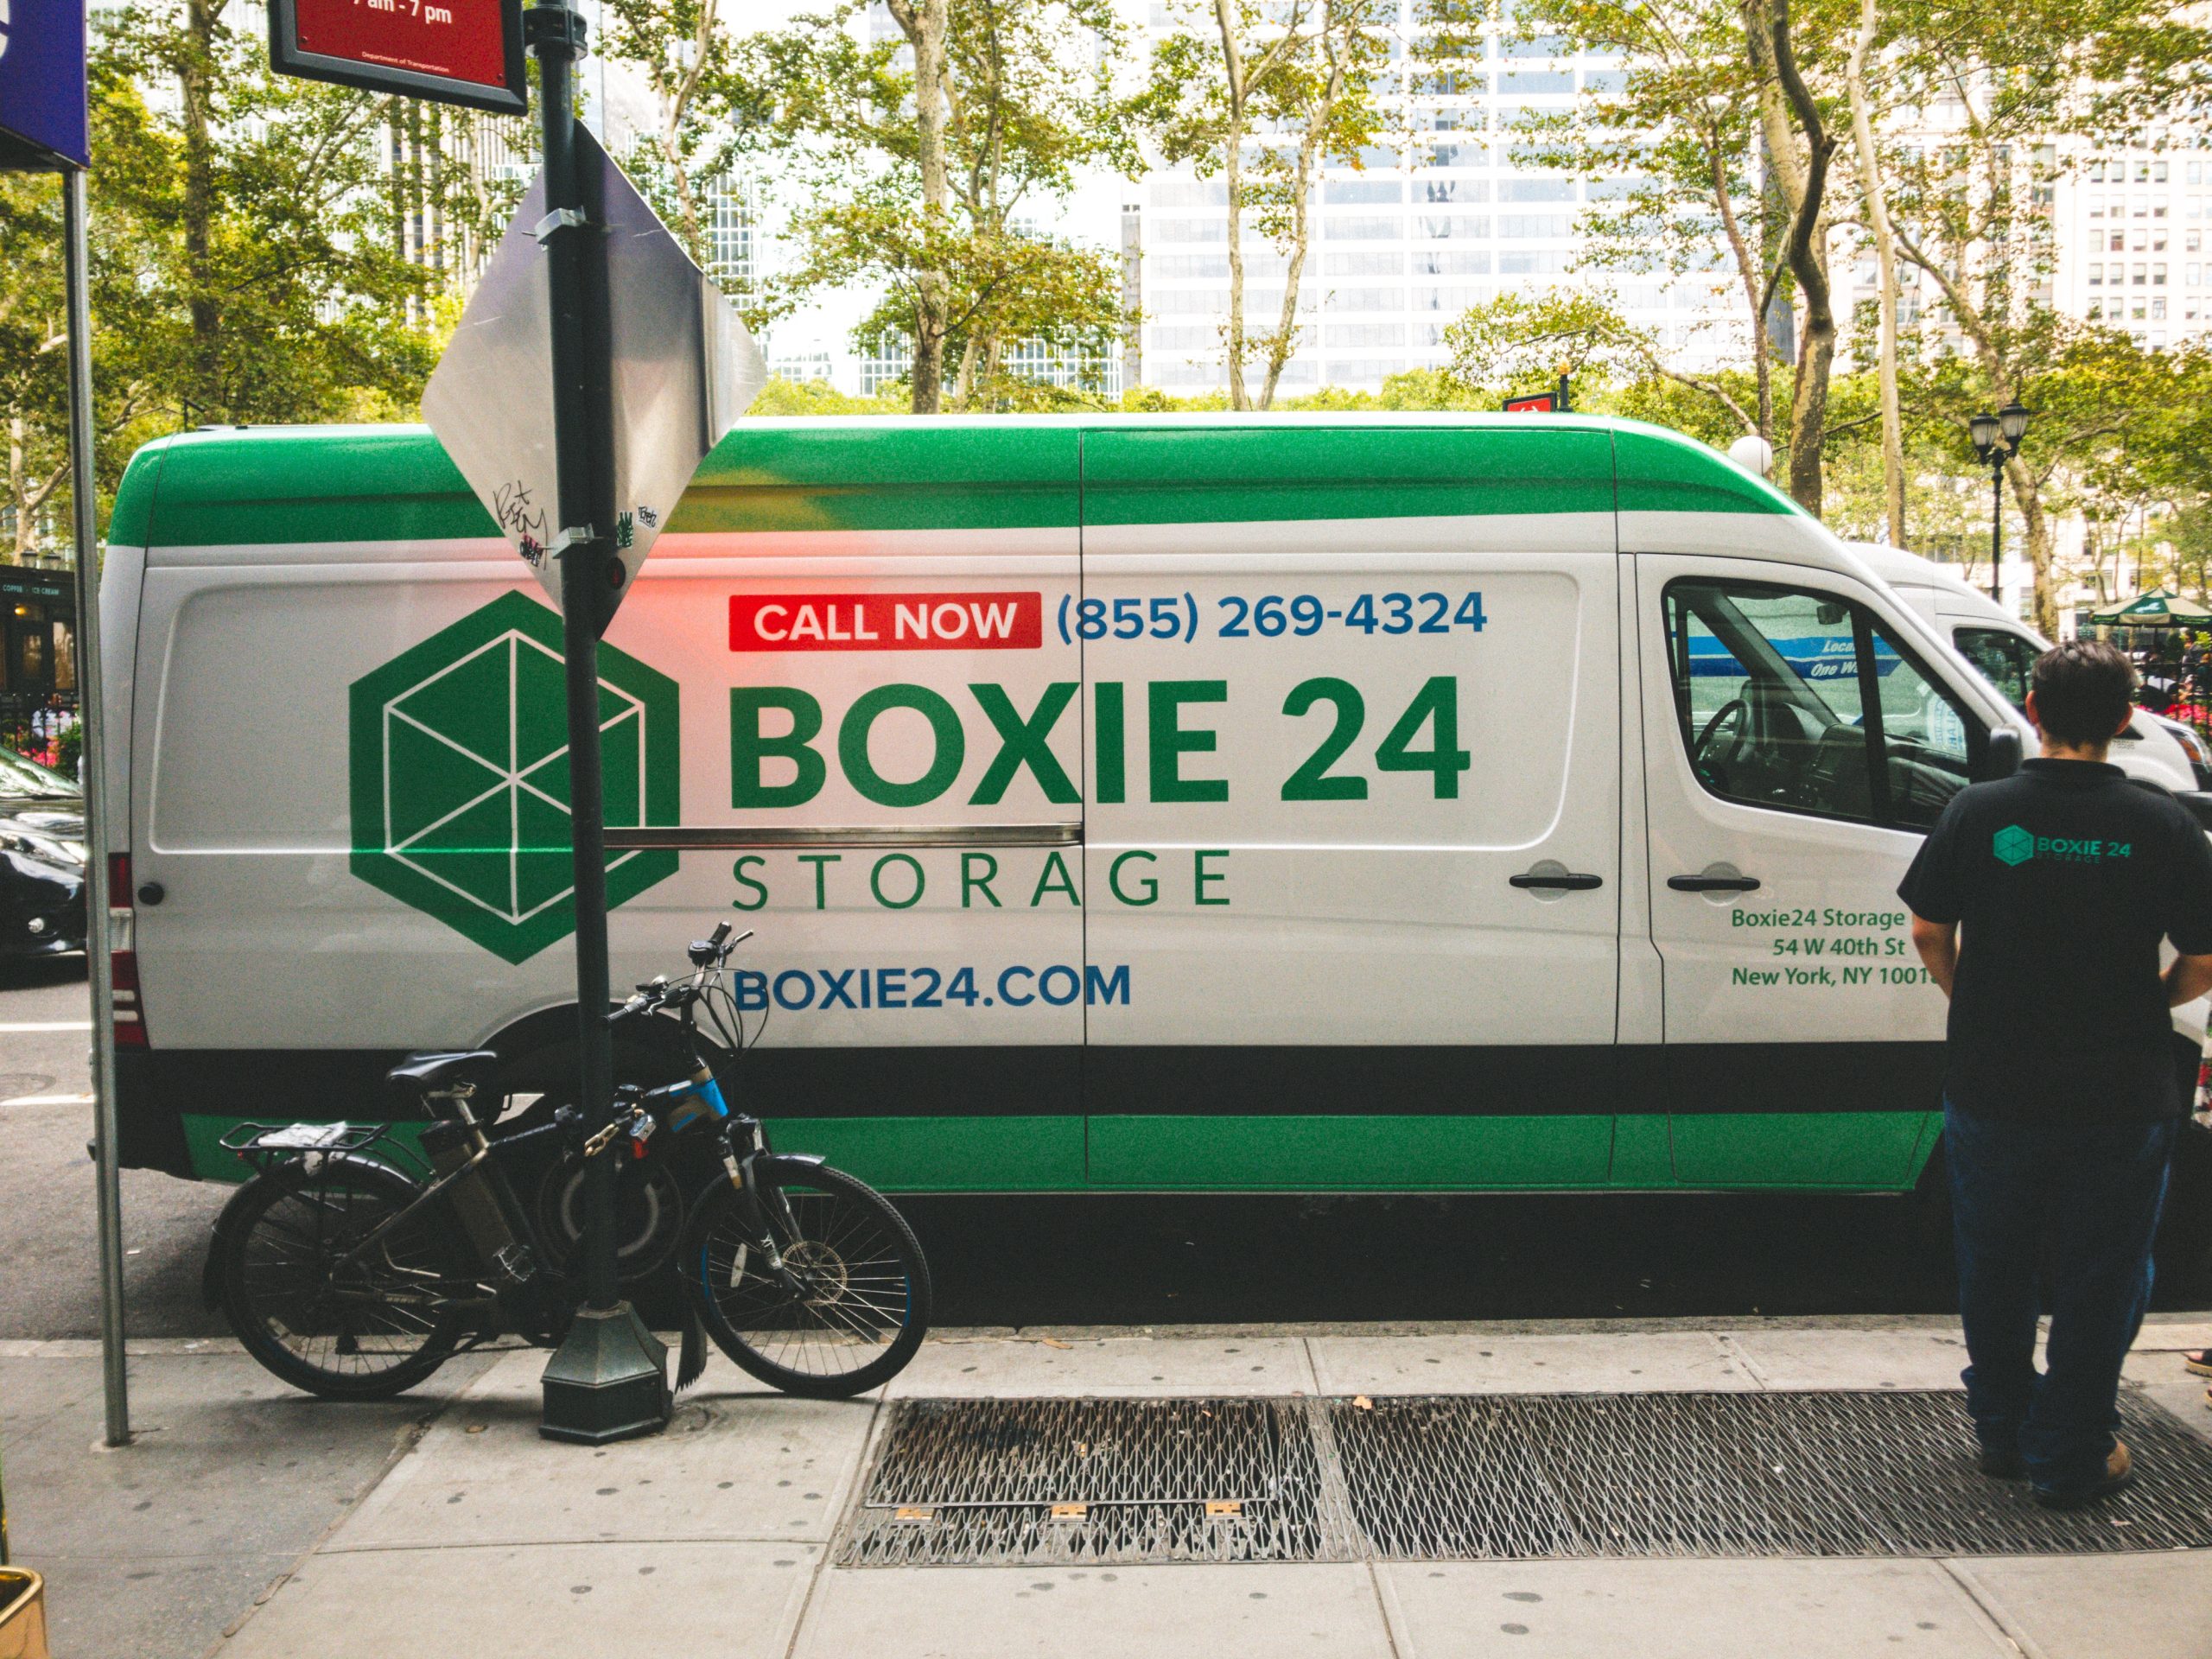 Boxie24 gaat partnership aan met De Loogman Groep